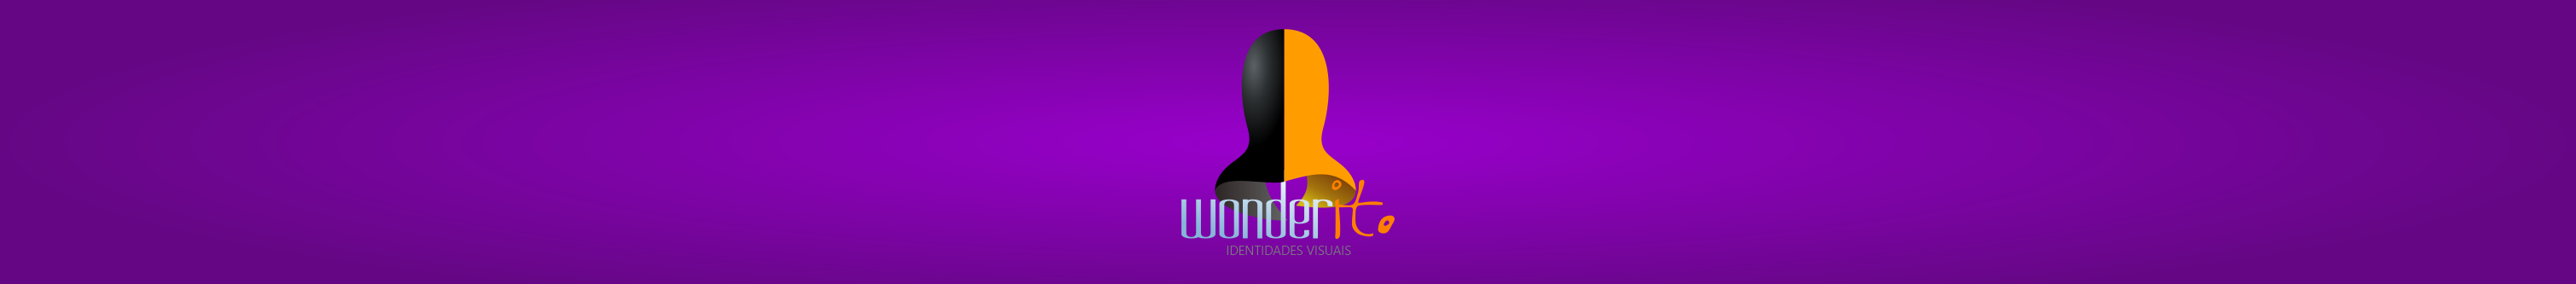 Wonder It Design's profile banner